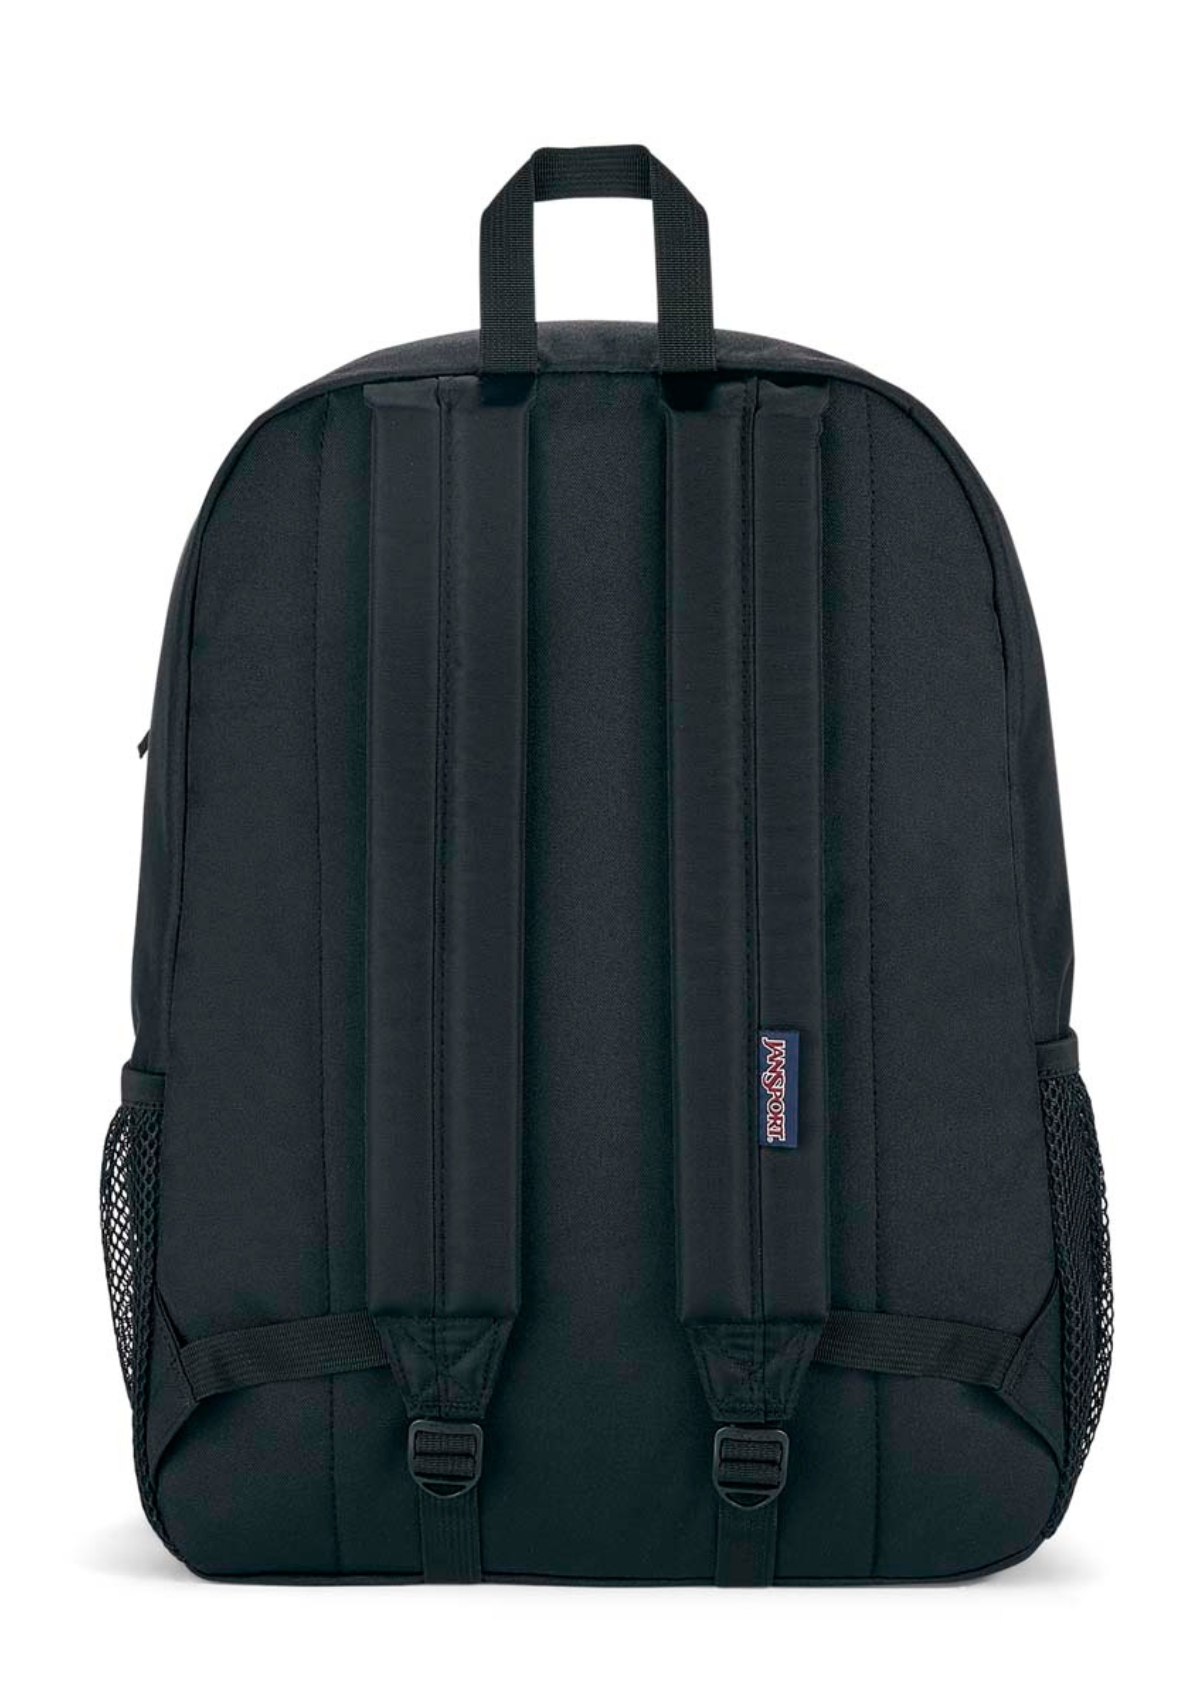 JanSport Backpacks Union Pack Black